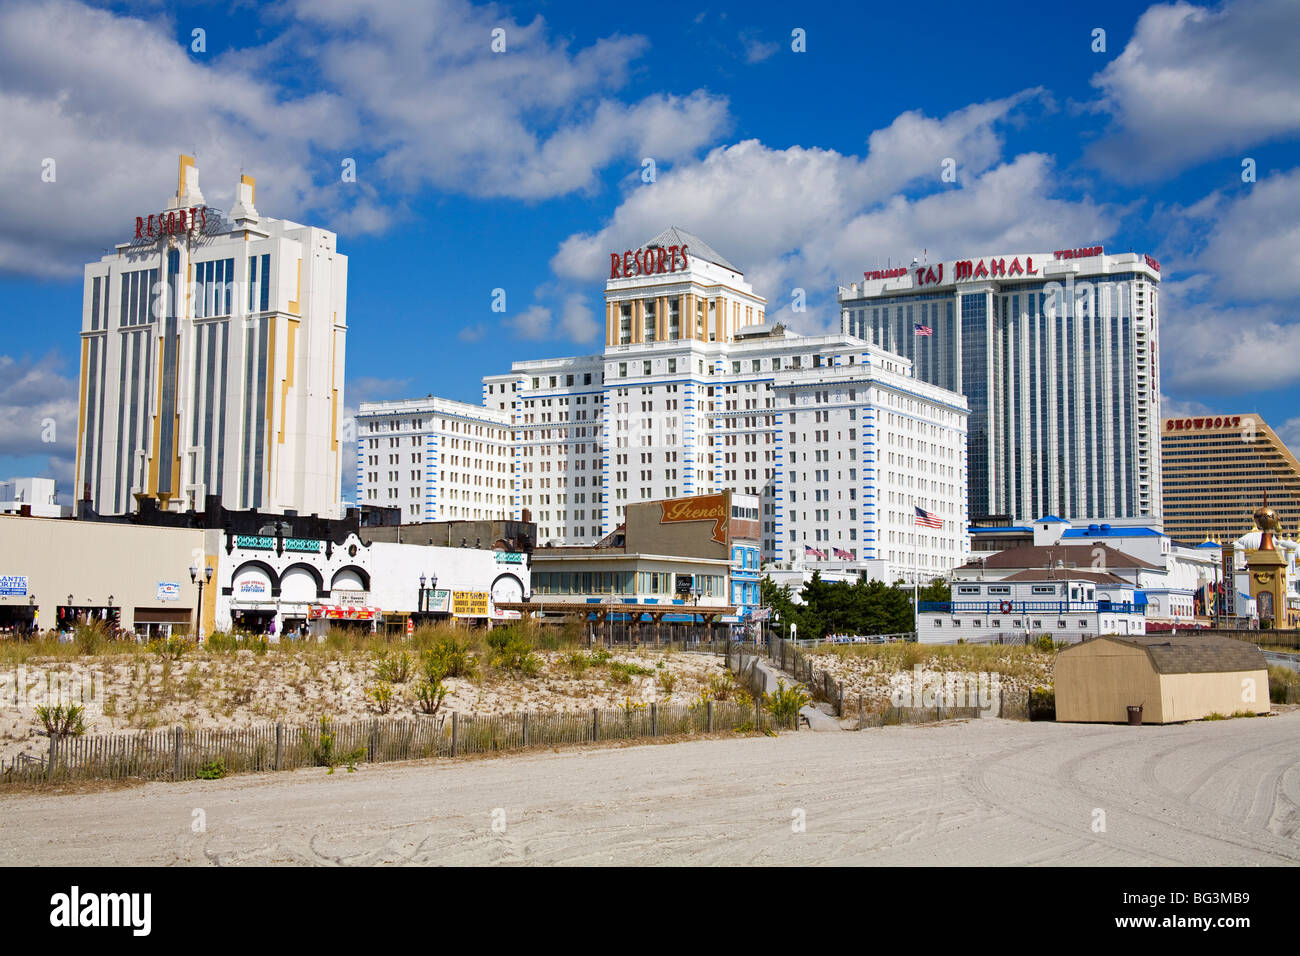 atlantic city boardwalk and casinos